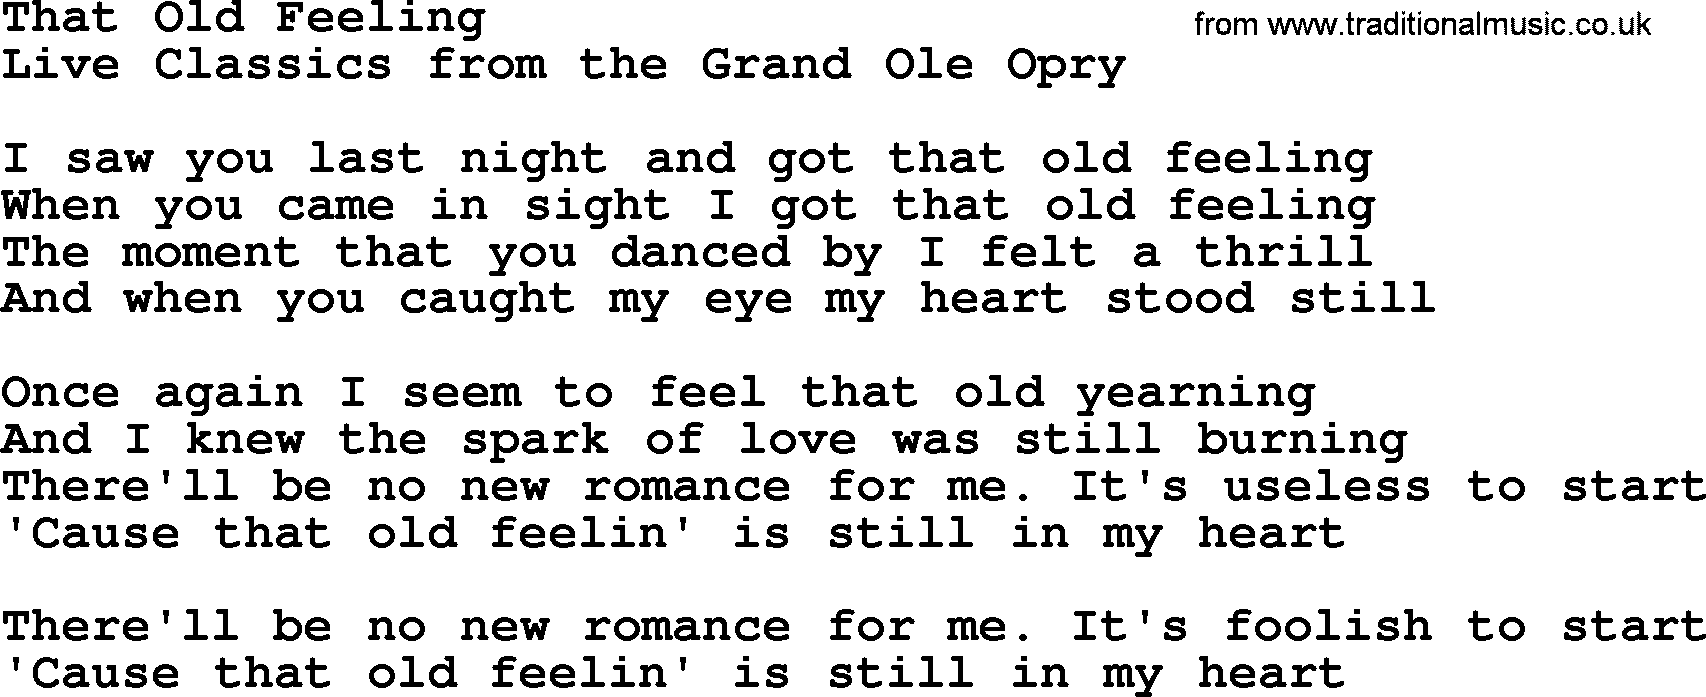 Marty Robbins song: That Old Feeling, lyrics